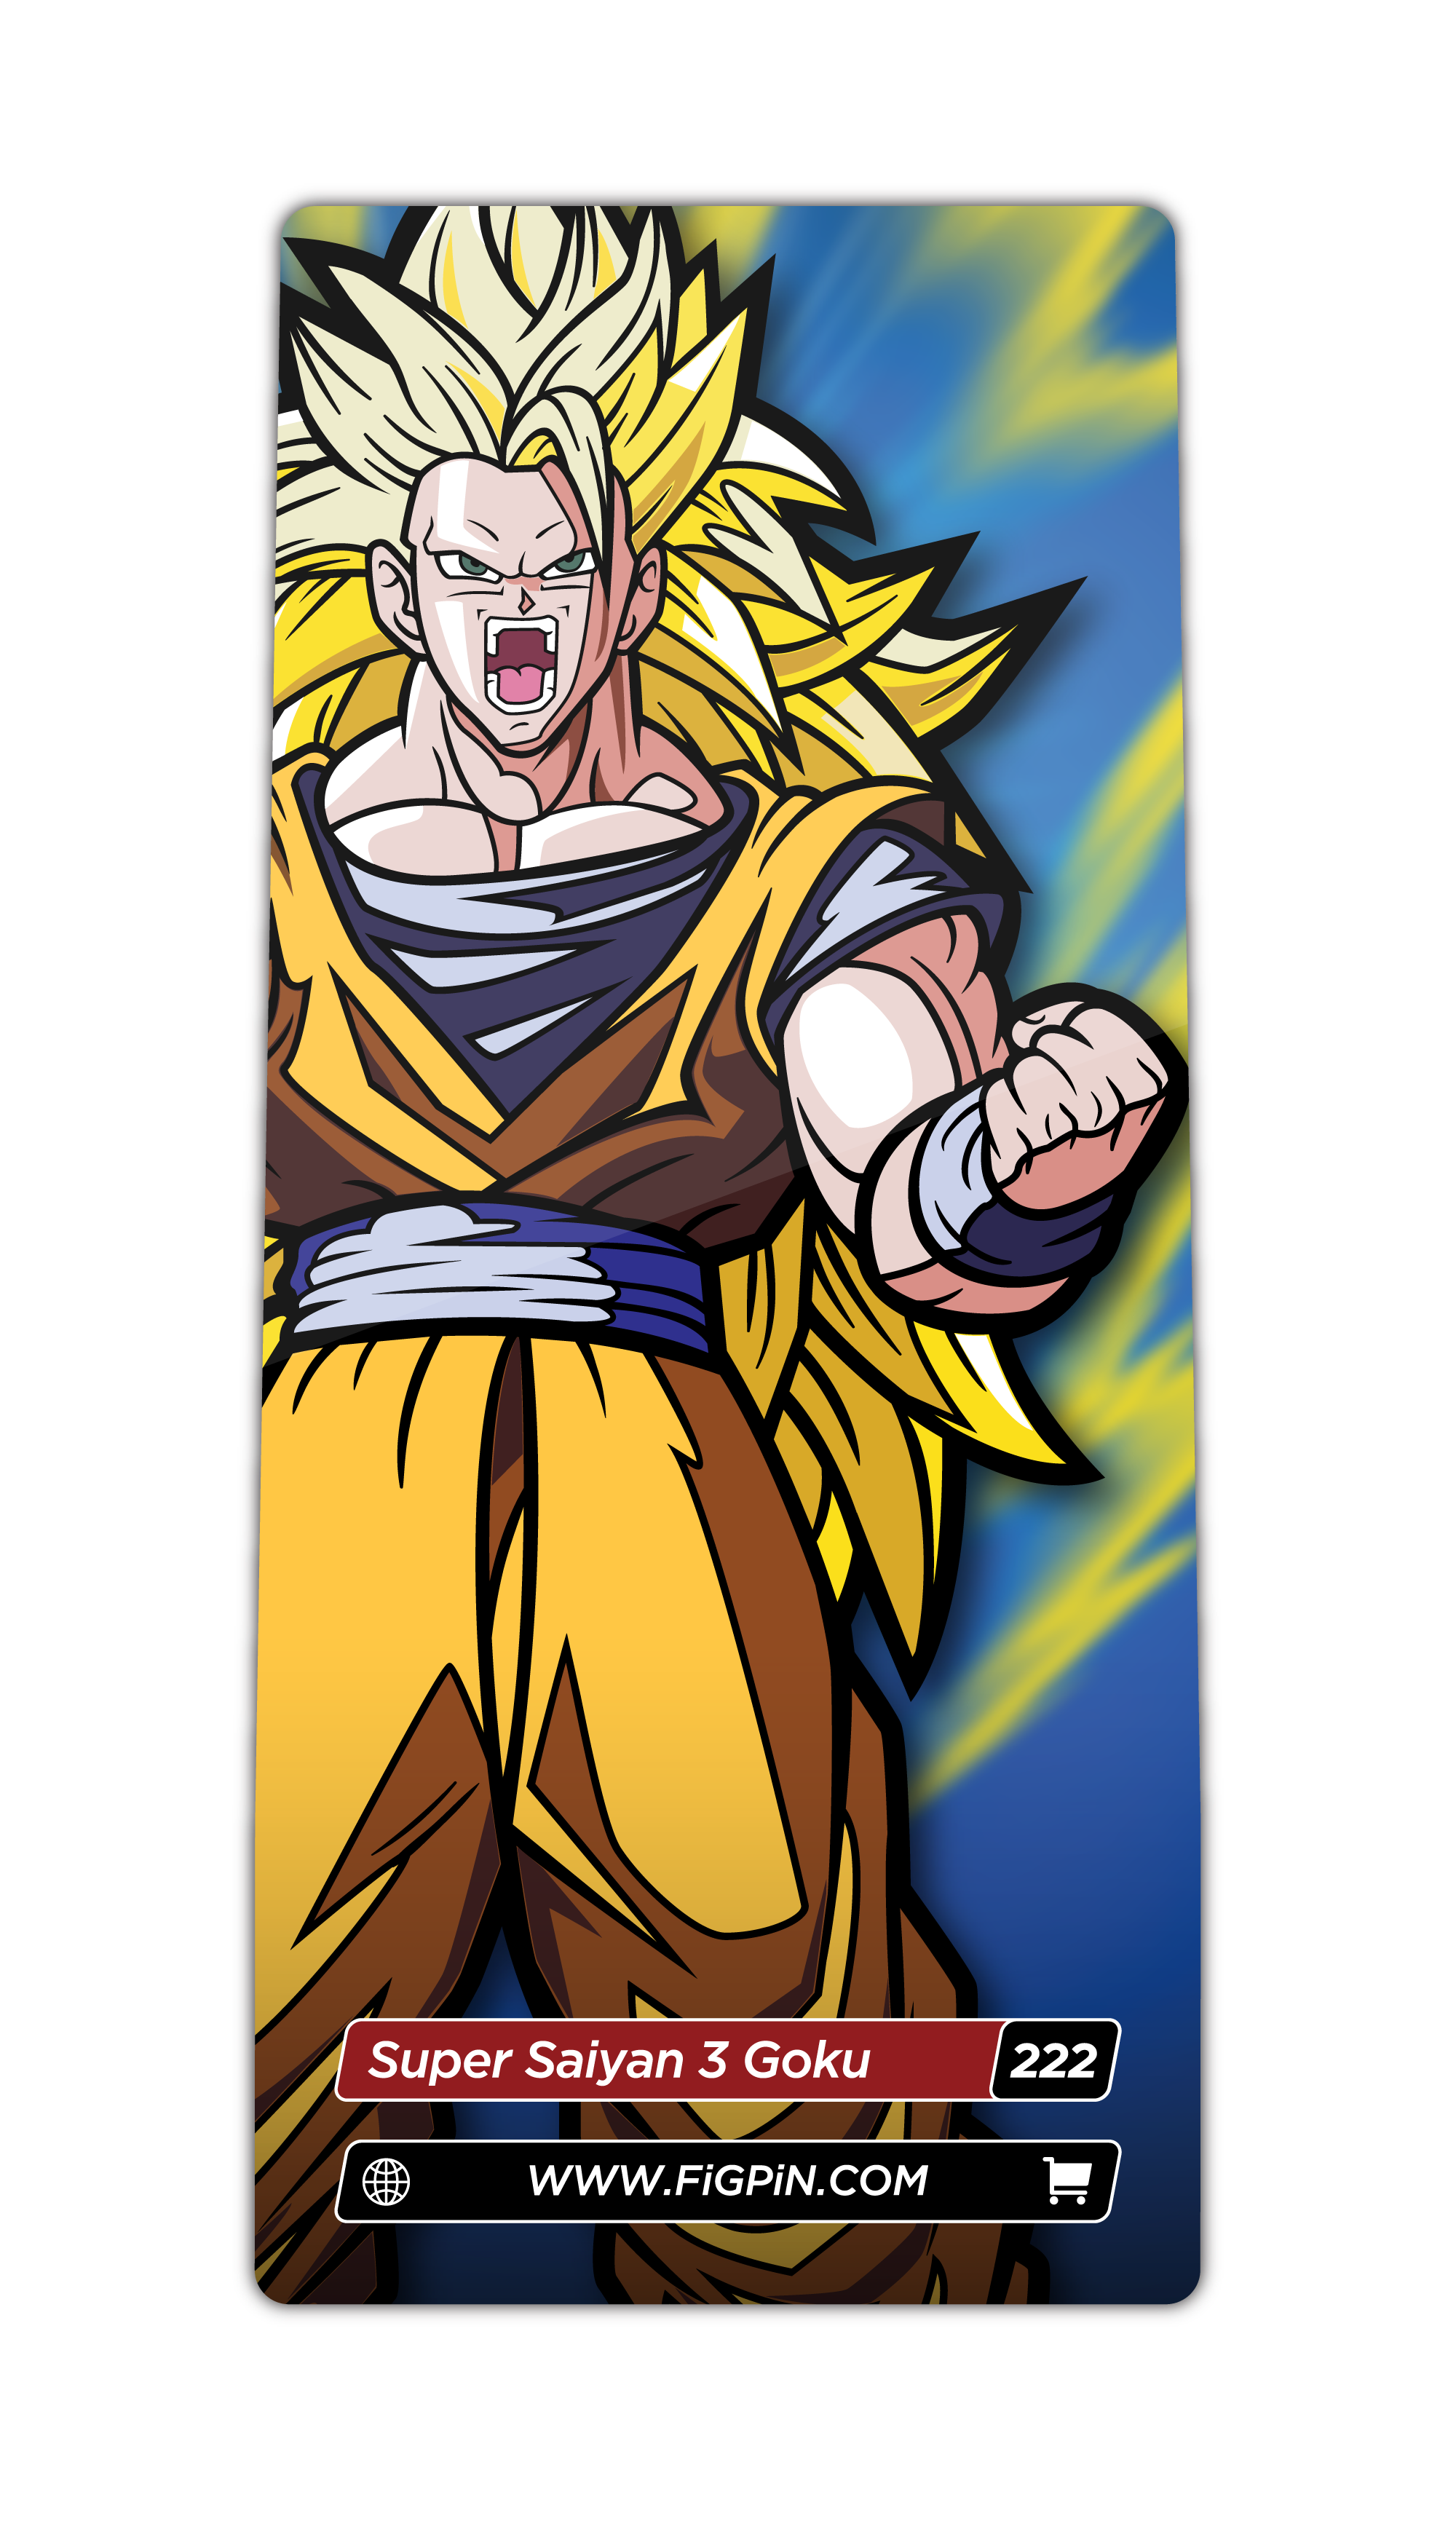 Super Saiyan 3 Goku (222)